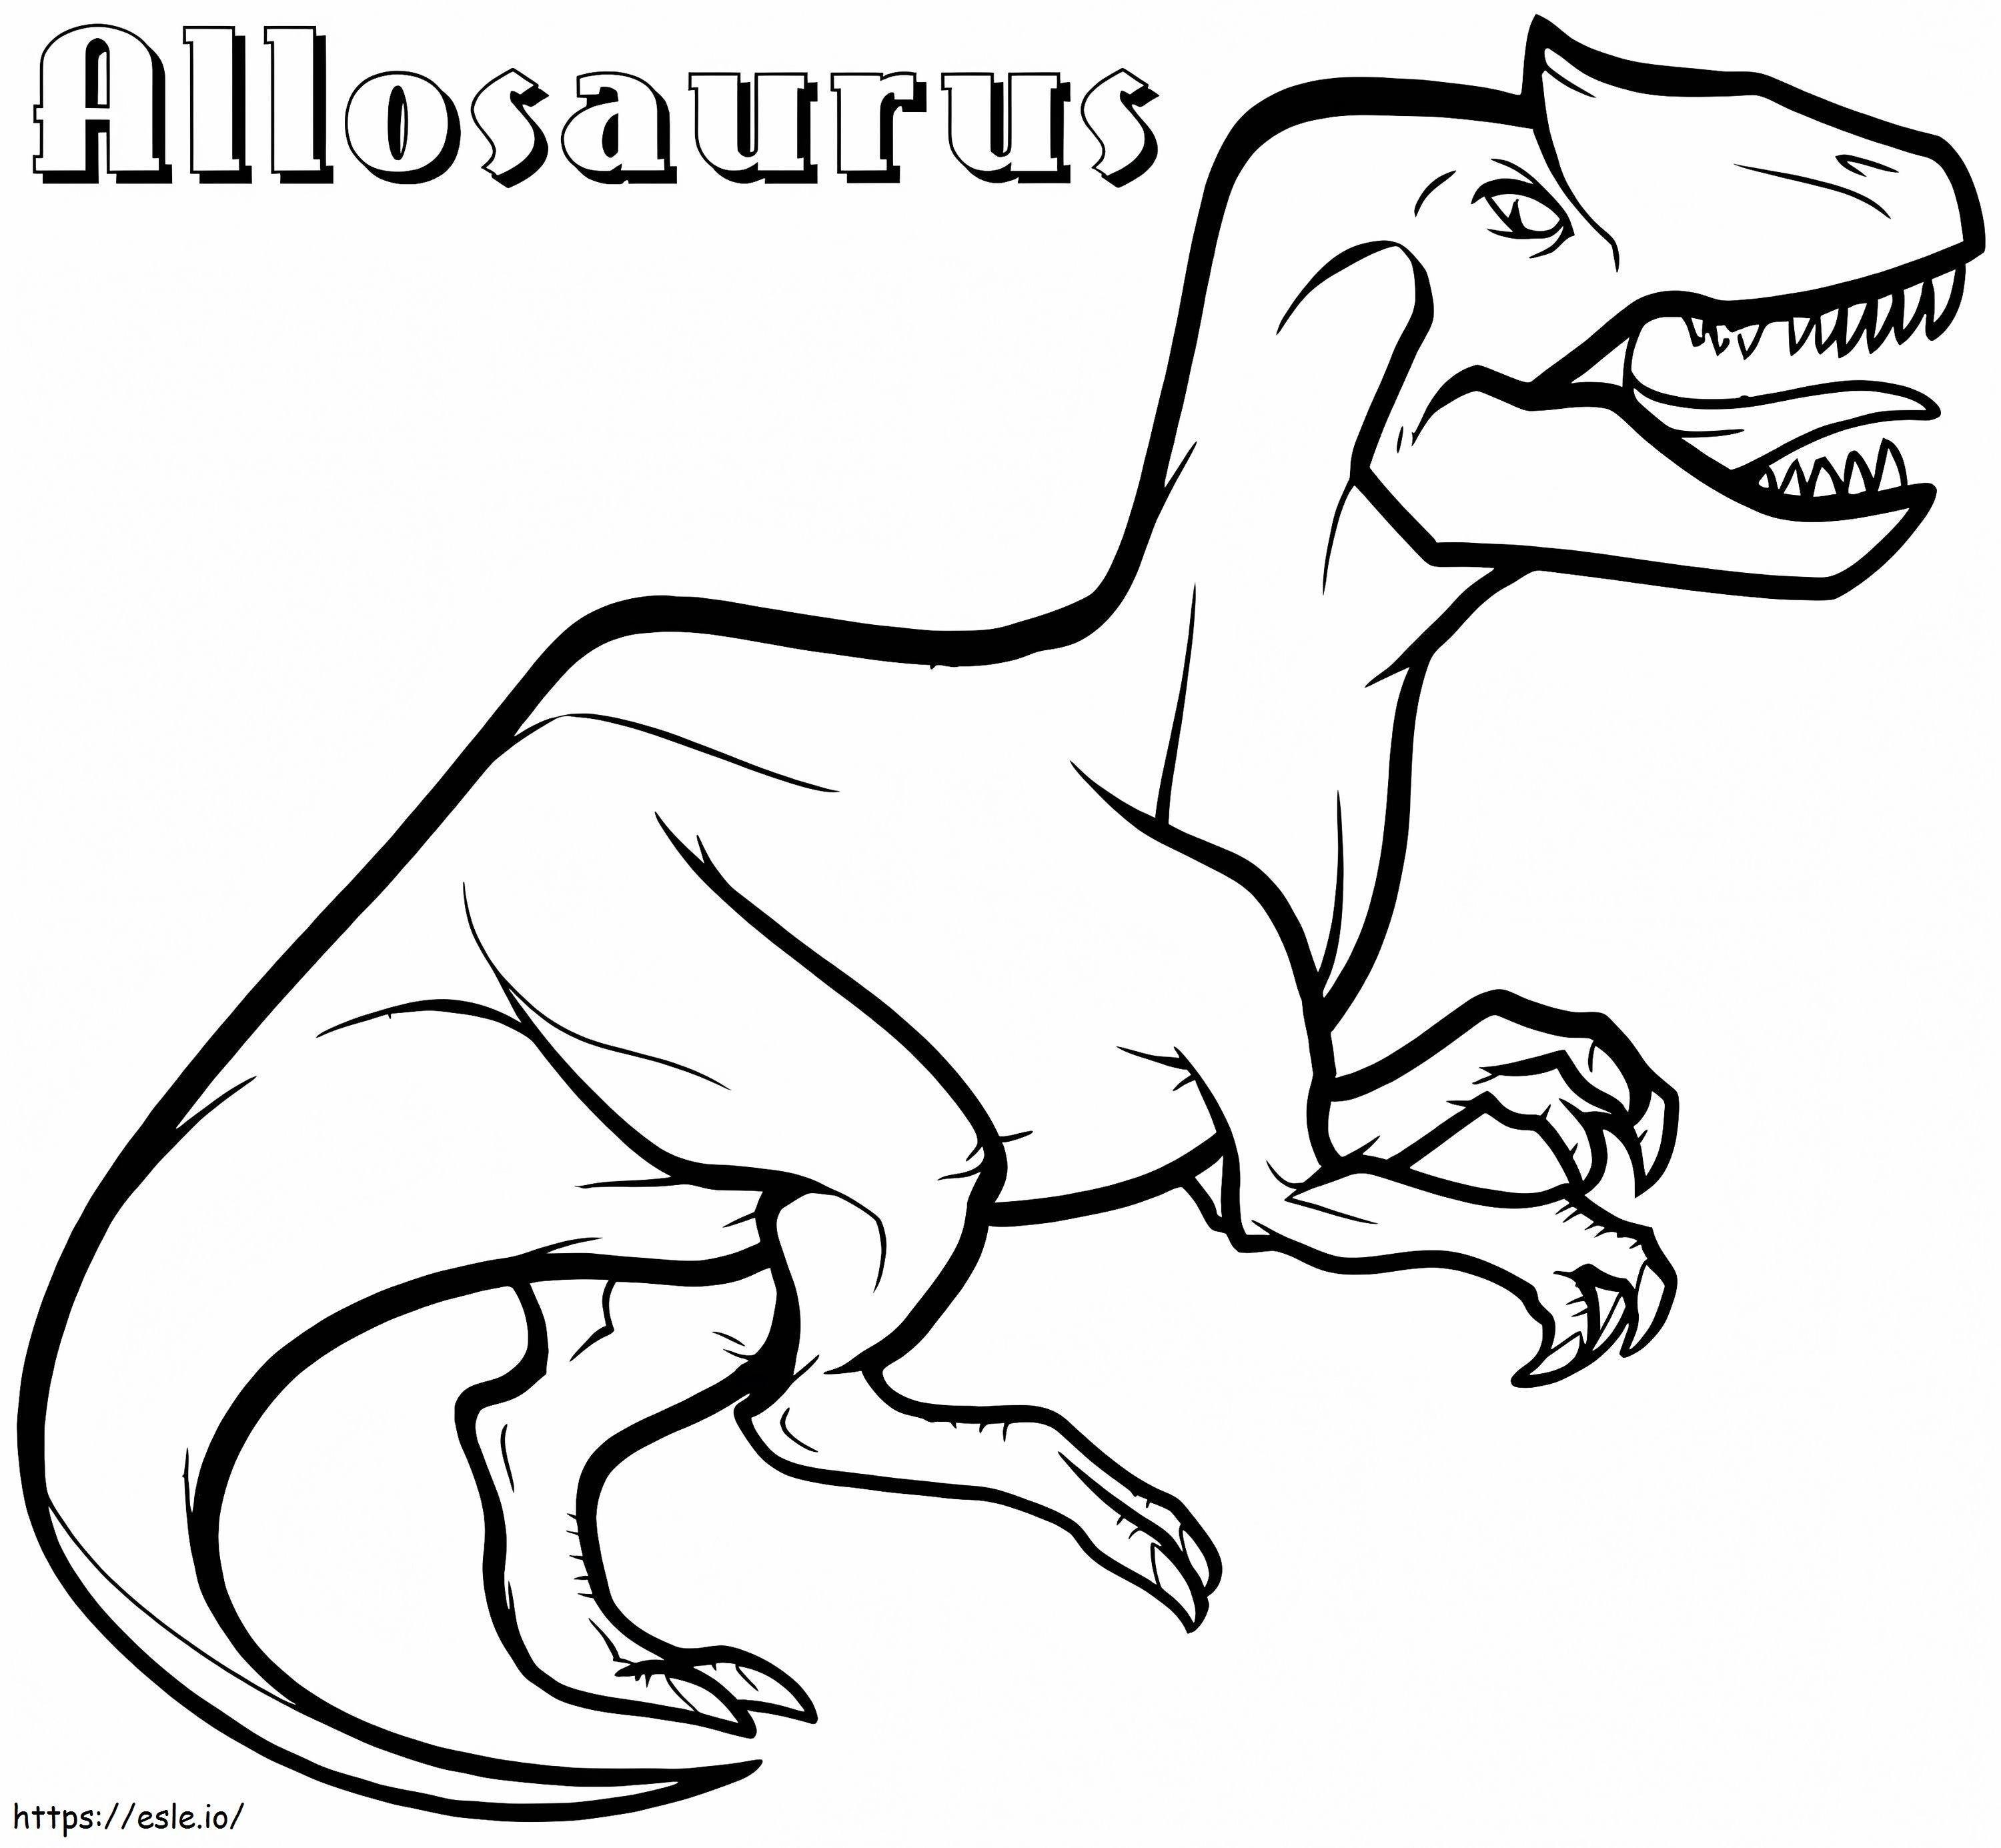 Allosaurus 2 ausmalbilder